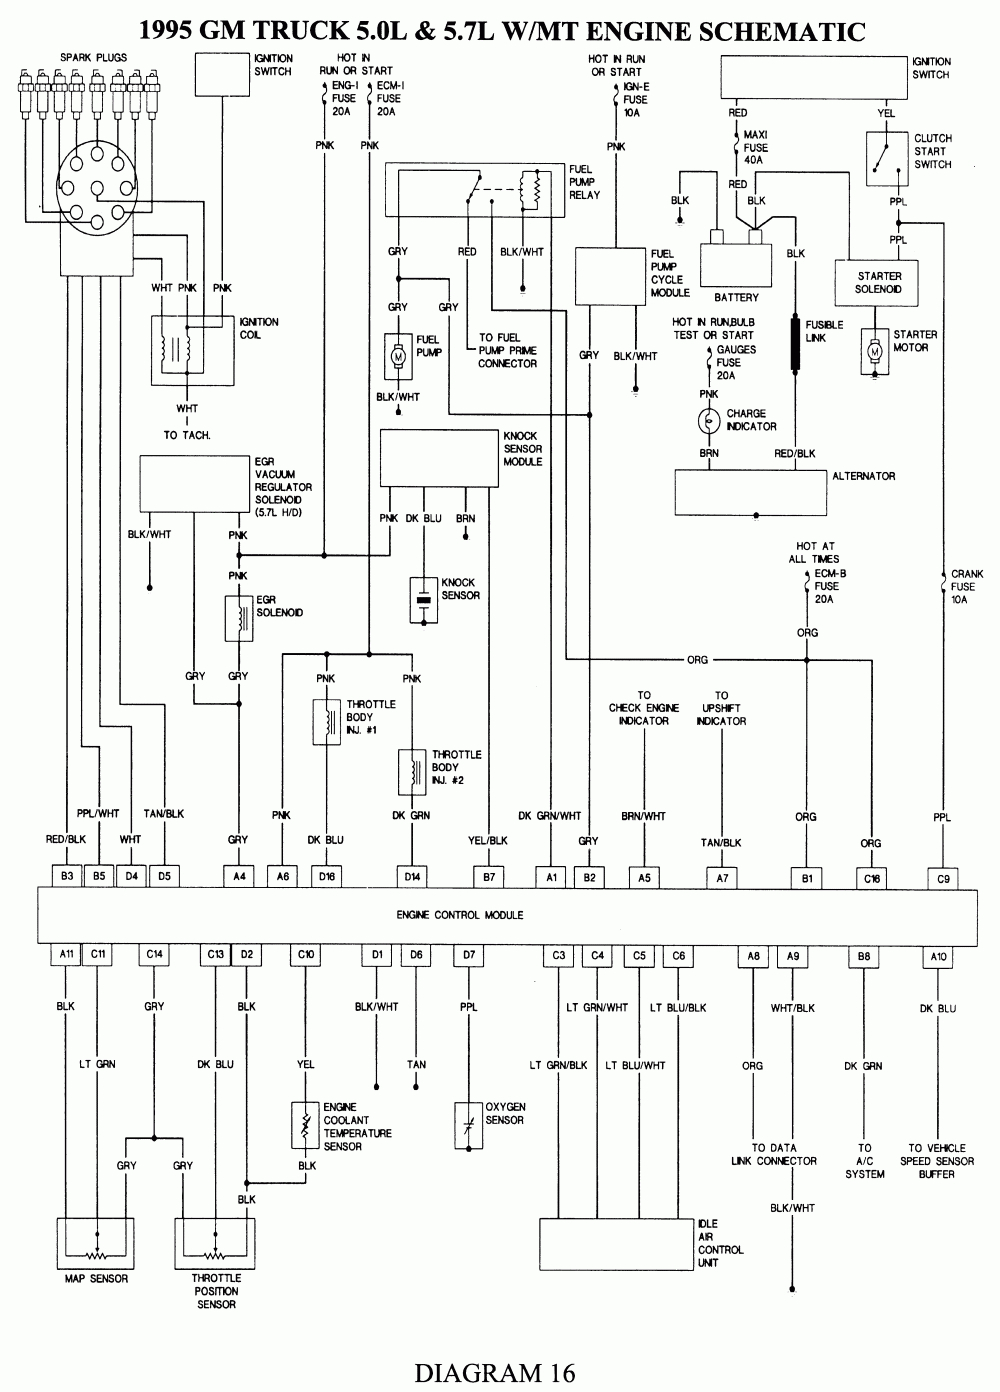 Repair Guides | Wiring Diagrams | Wiring Diagrams | Autozone - 1989 Chevy Truck Wiring Diagram